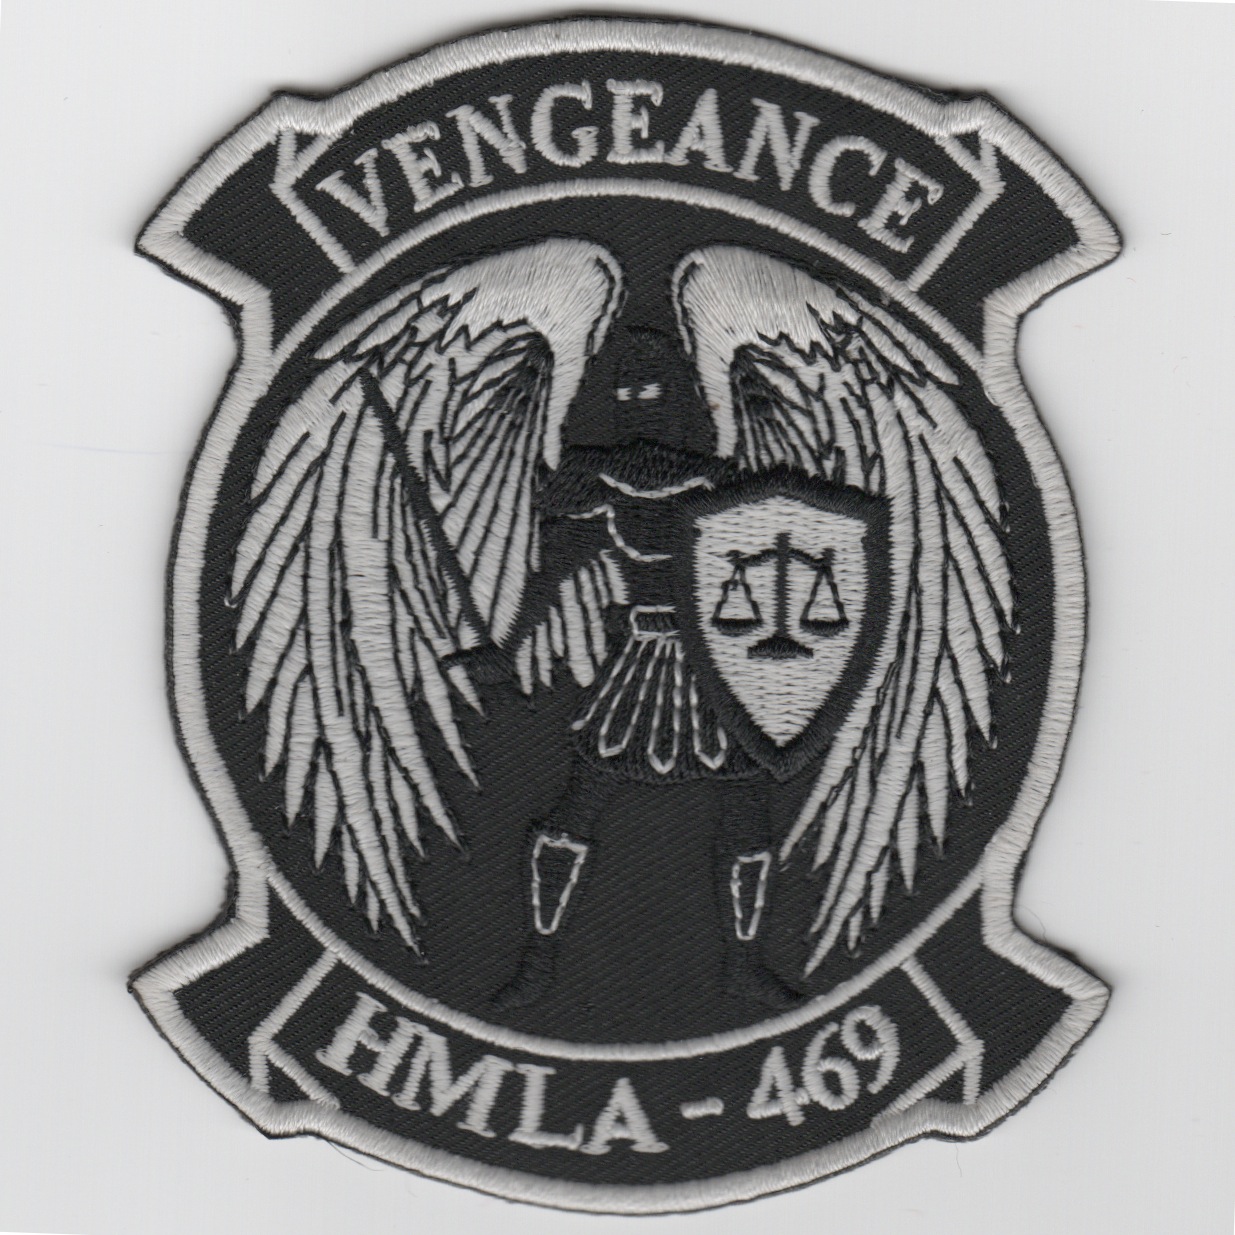 HMLA-469 'Vengeance' (Black/GITD)